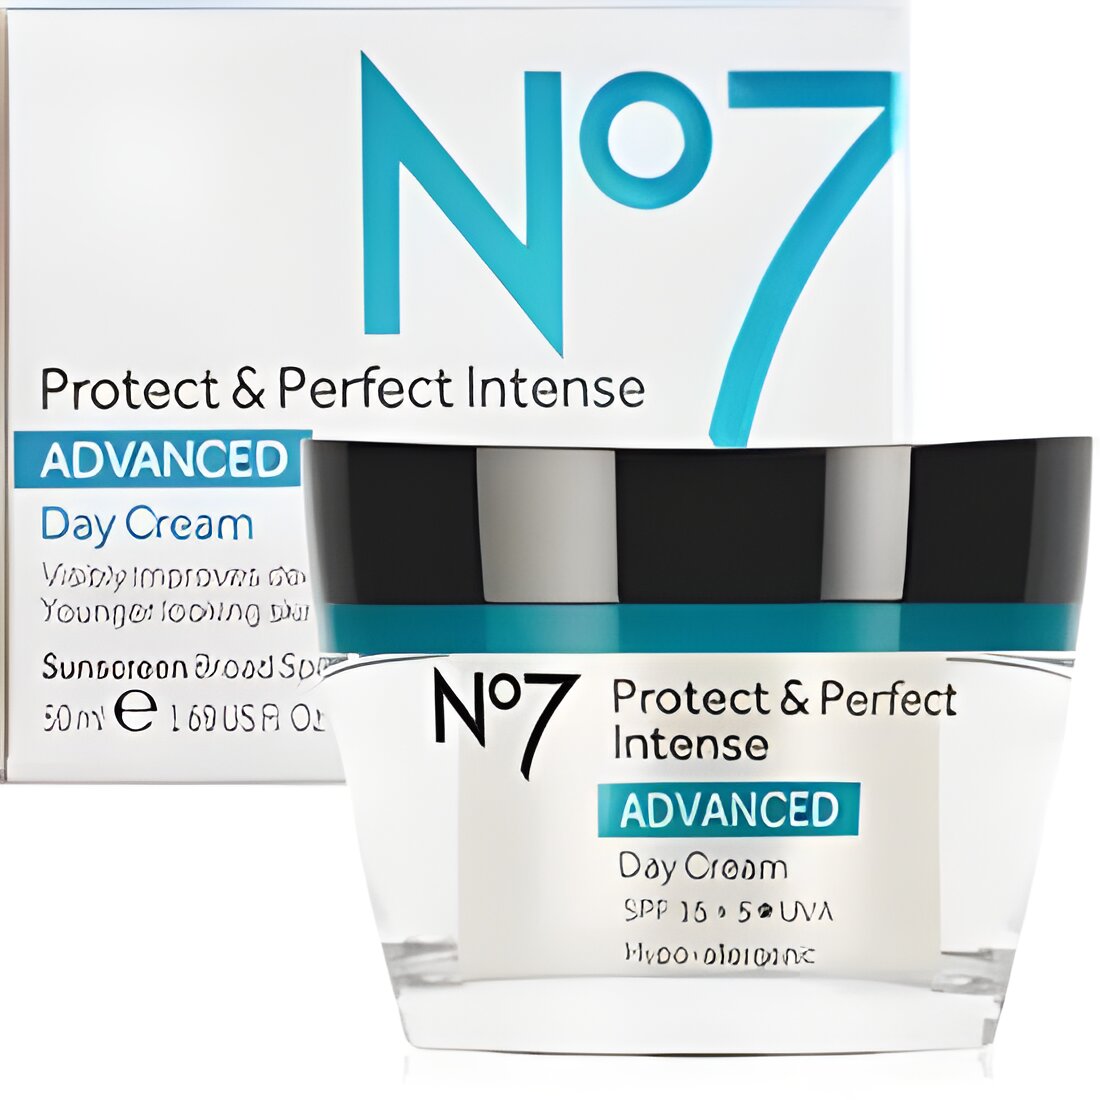 Free No7 Protect & Perfect Intense ADVANCED Day Cream